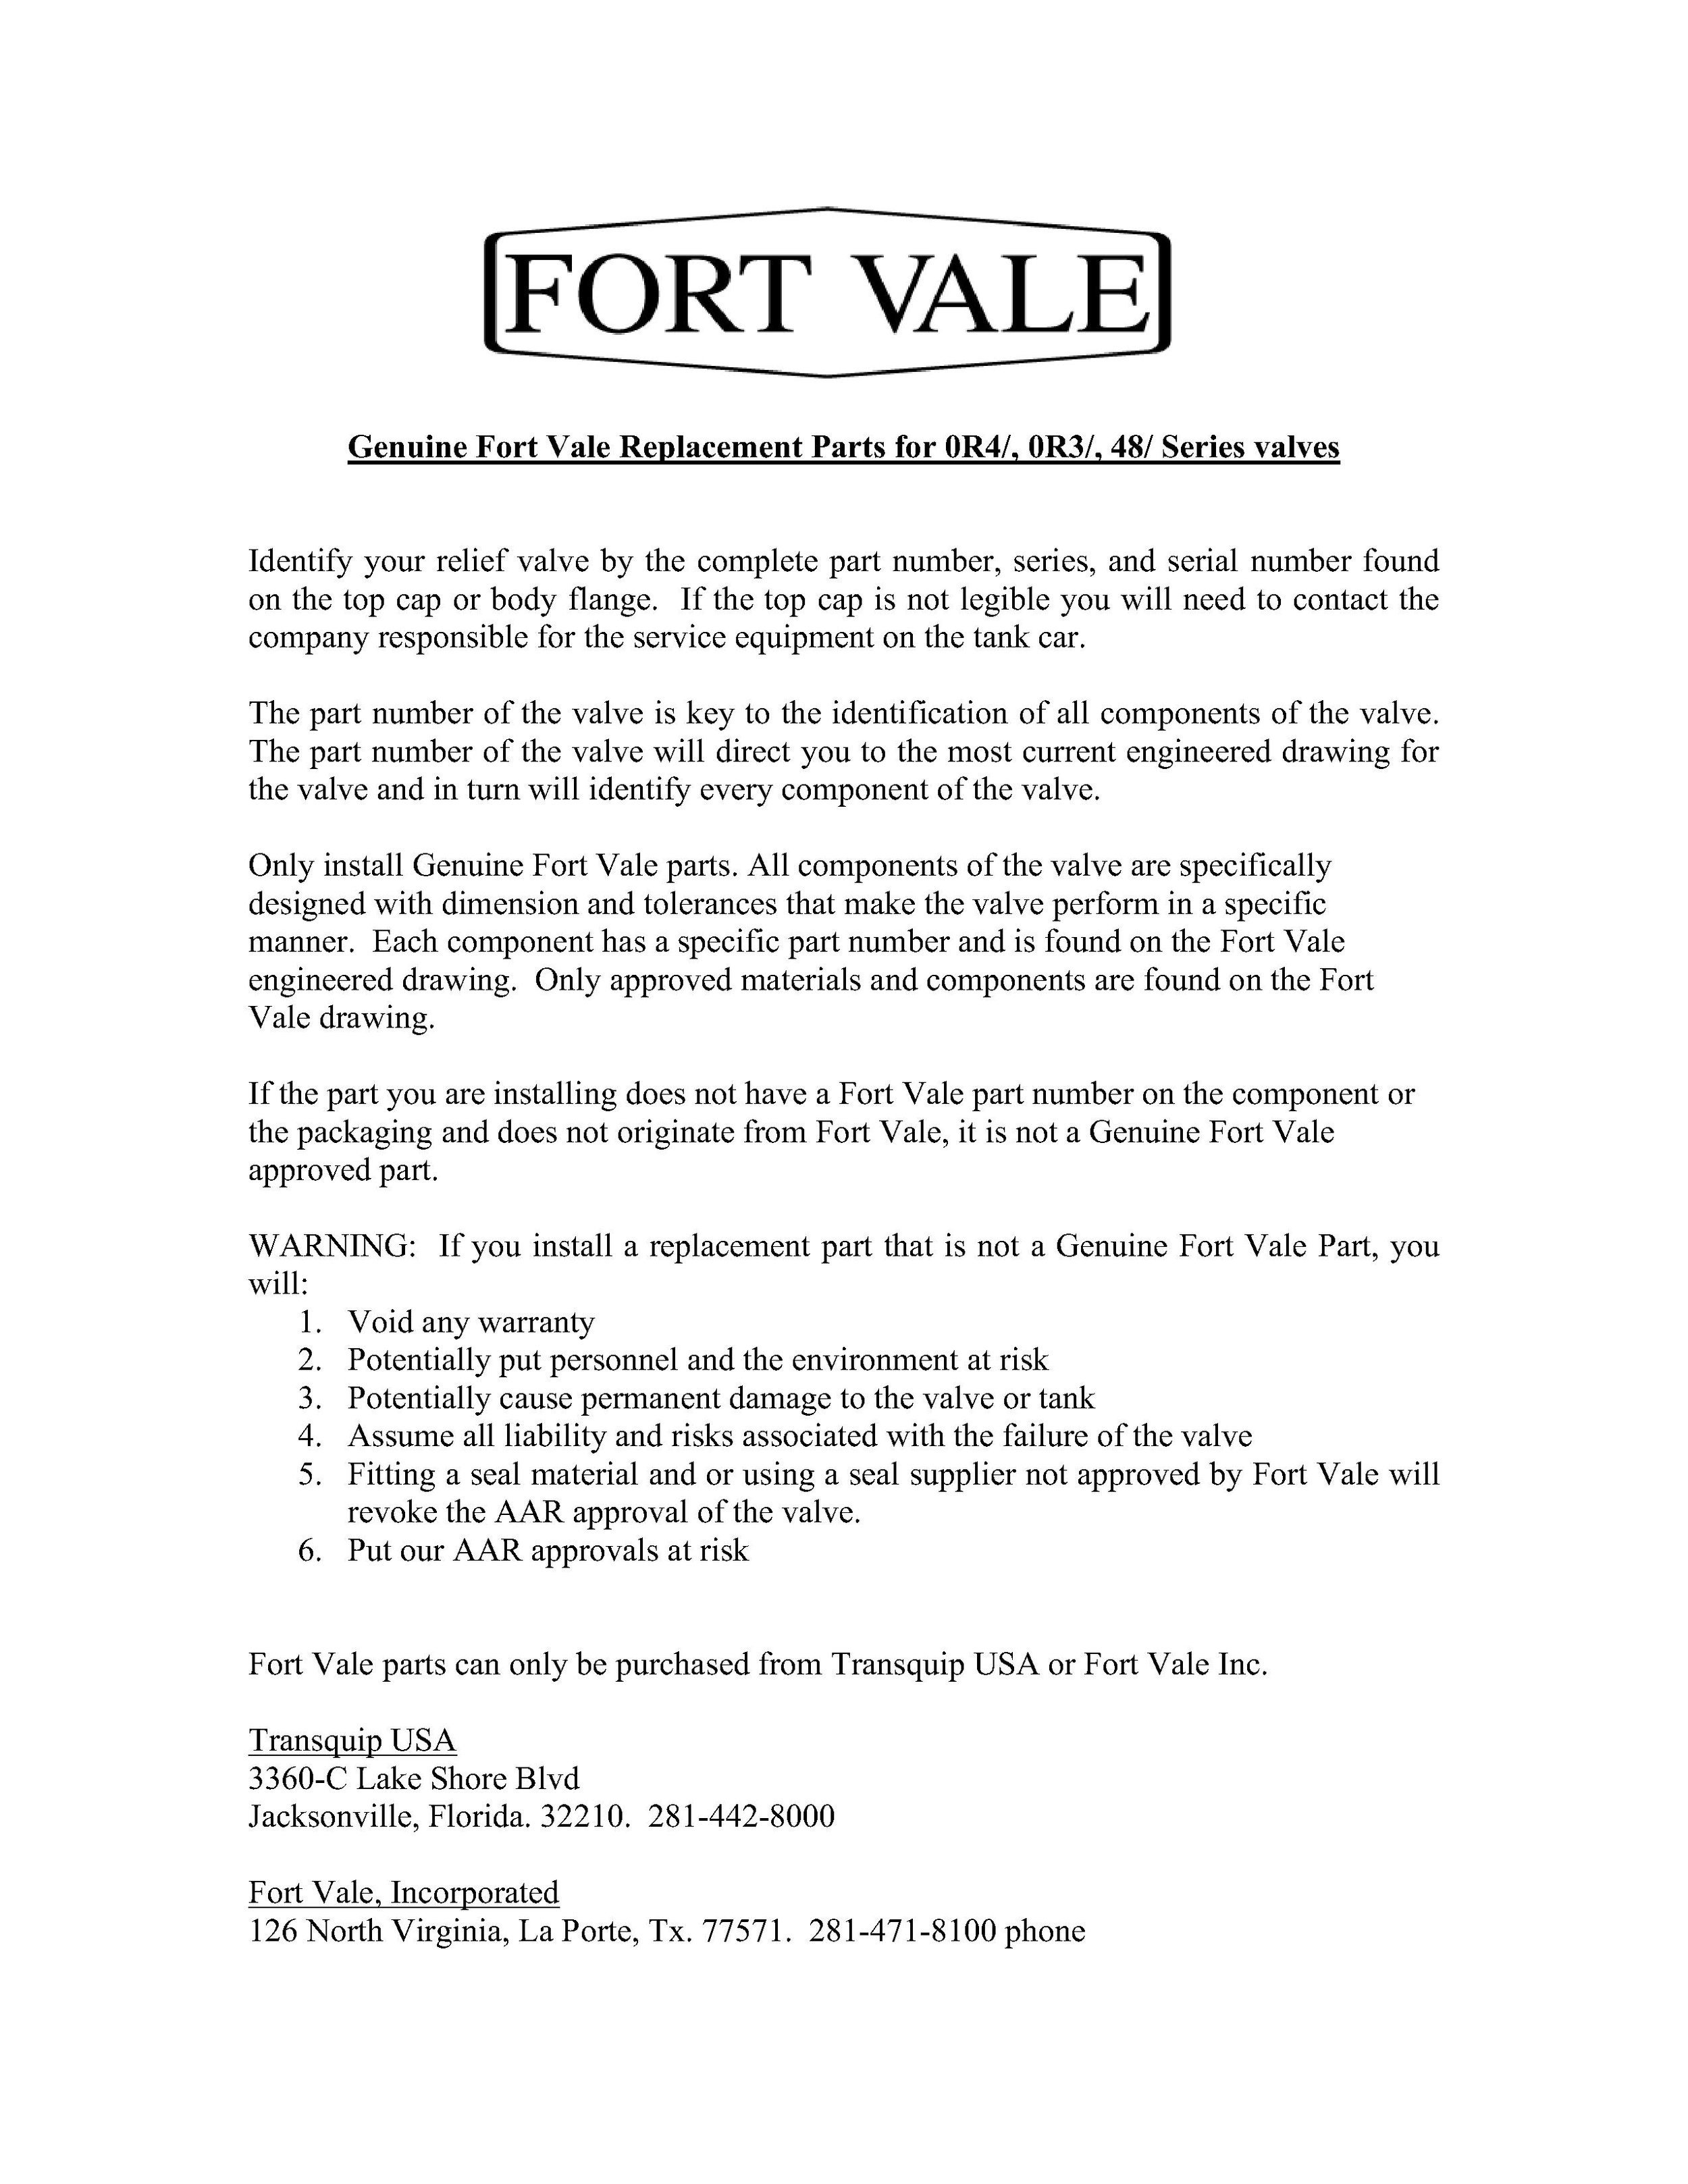 Fort Vale OEM Repair Kit Notice